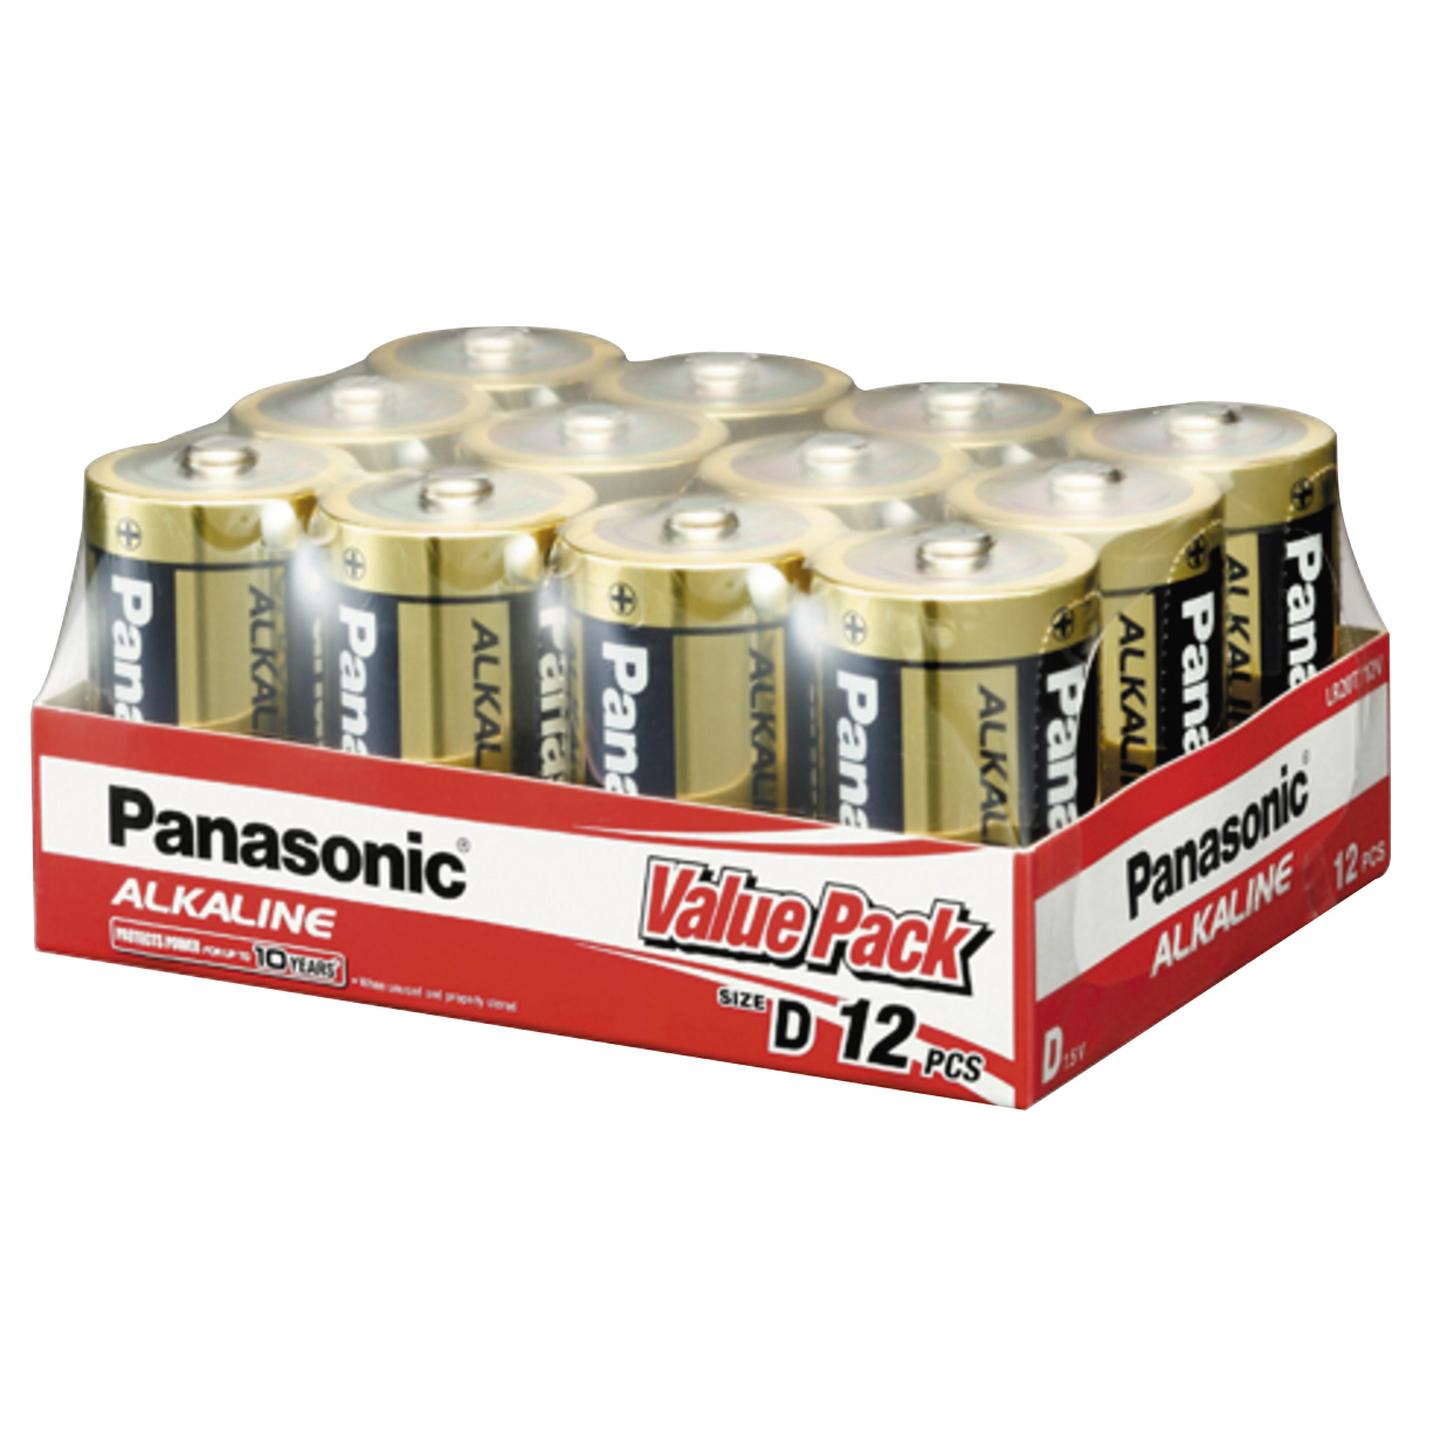 Panasonic D Batteries - Pack of 12